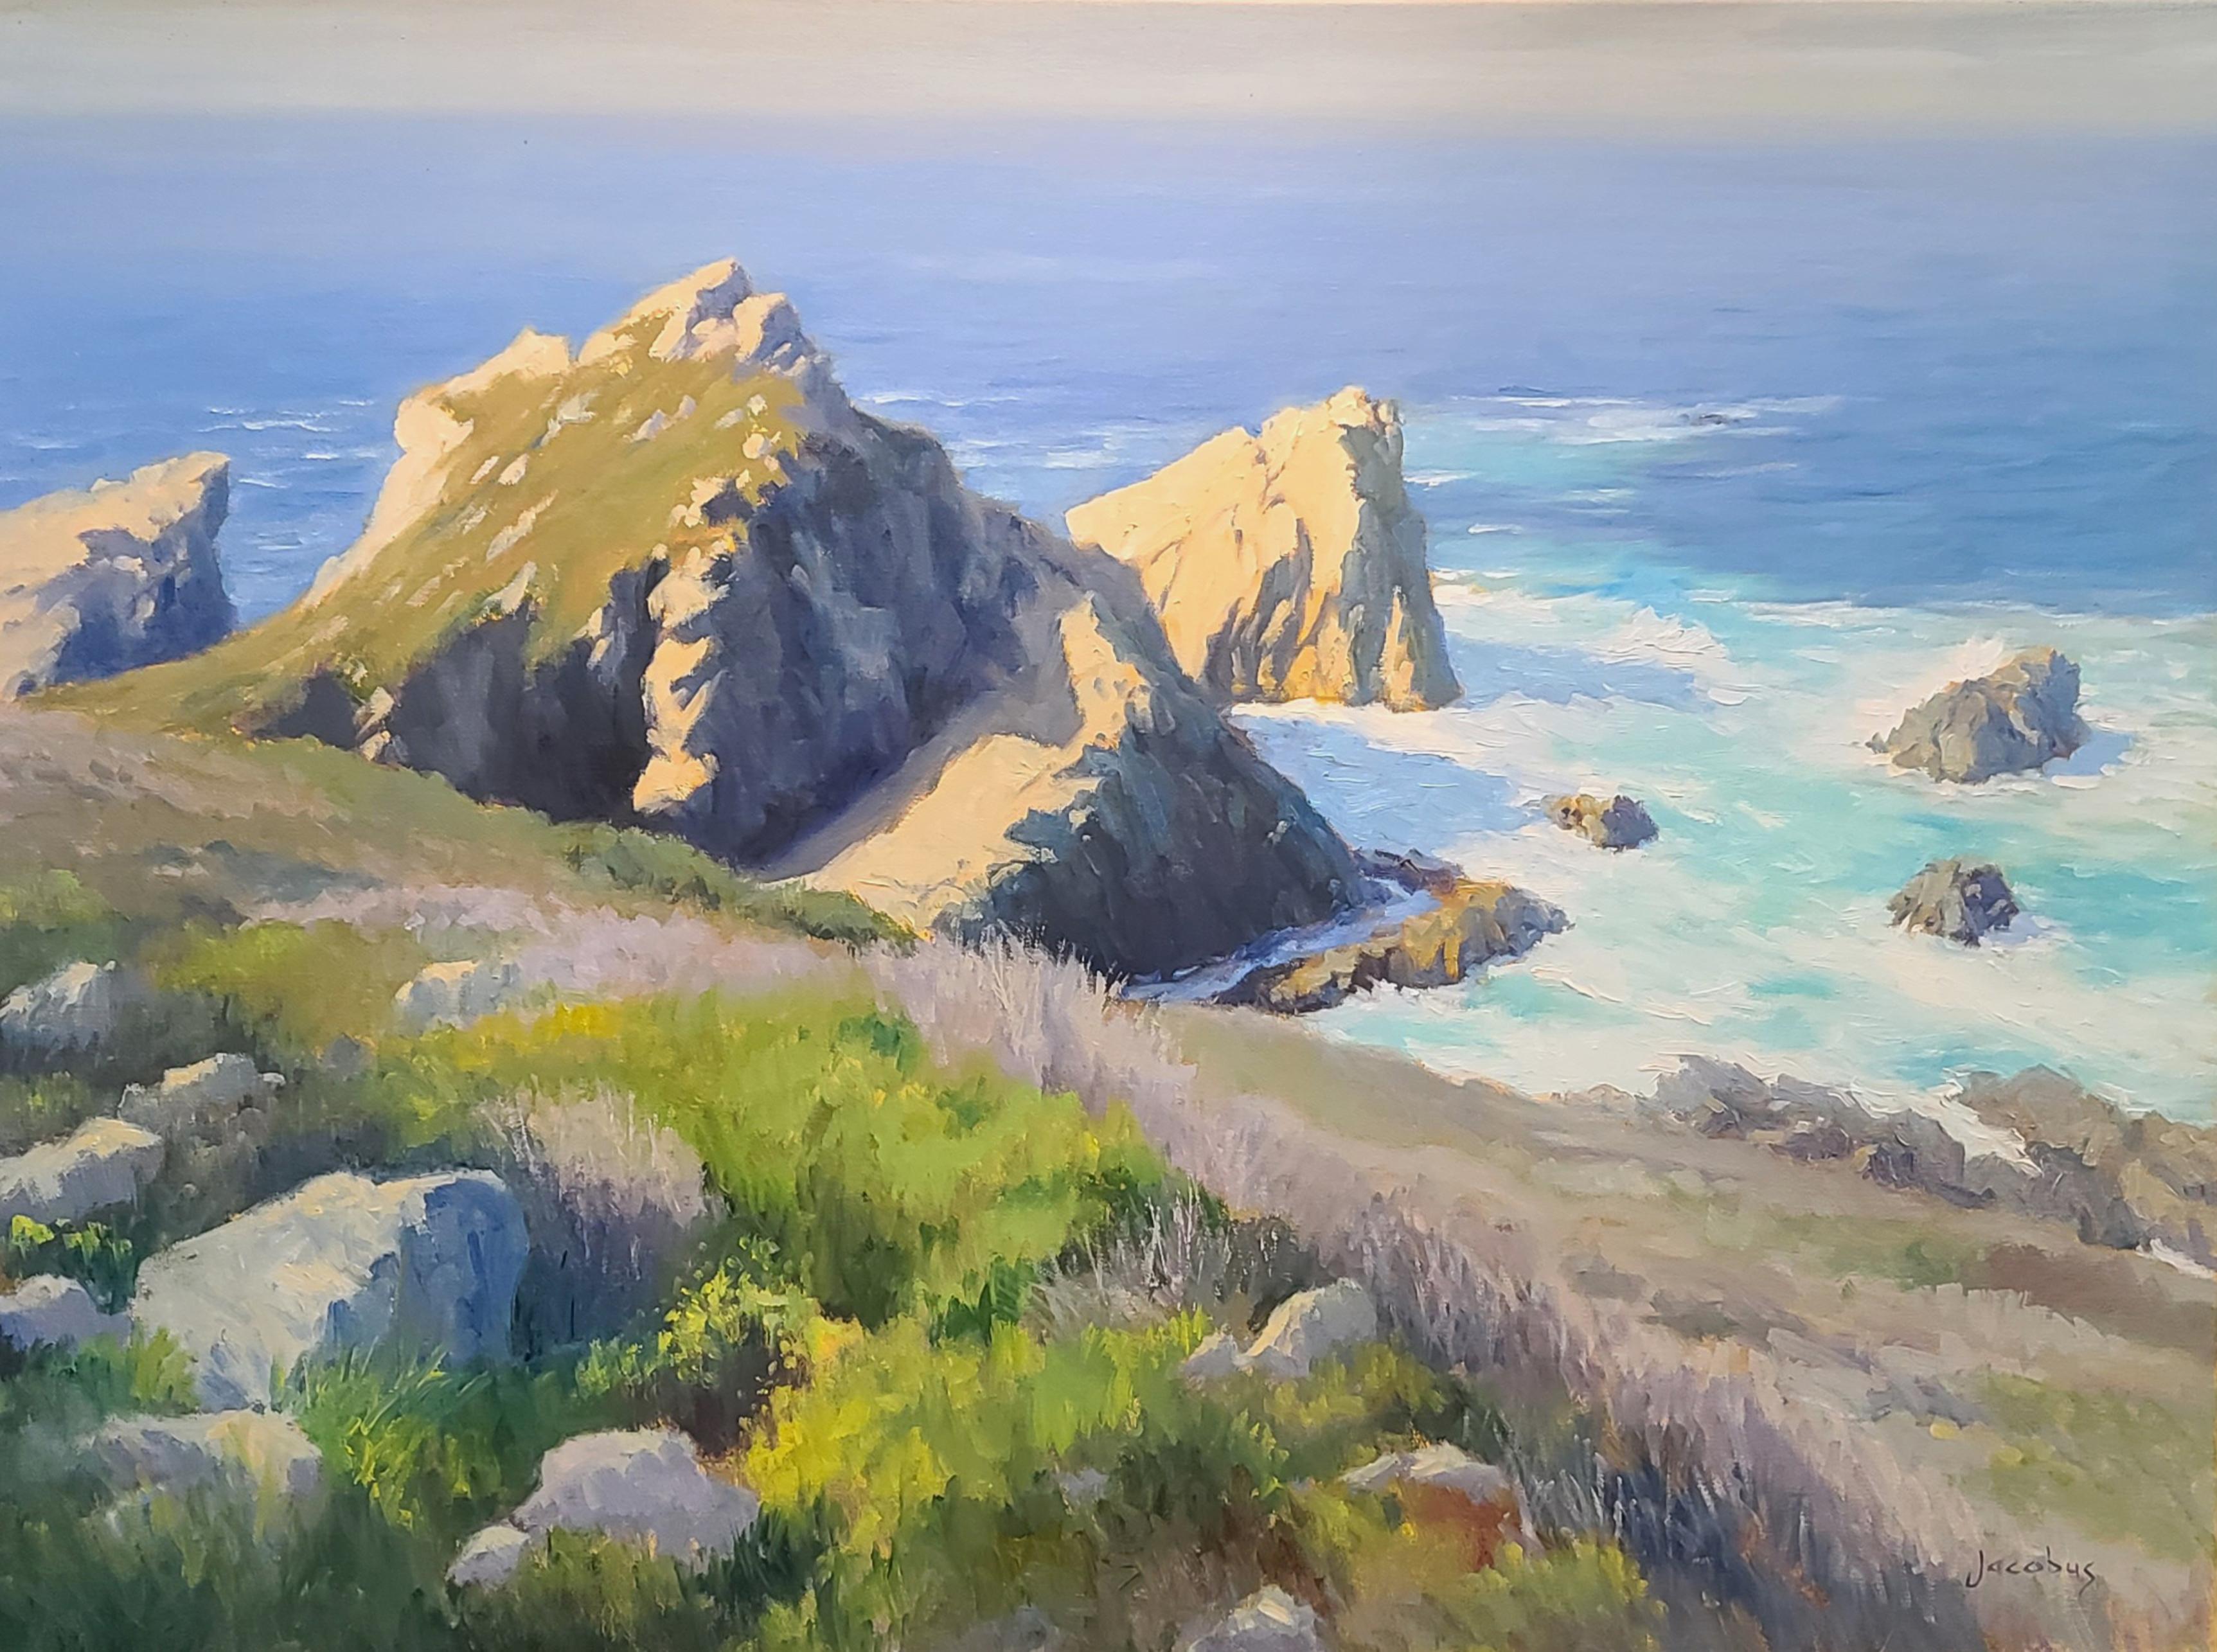 Jacobus Baas Landscape Painting - "Rocky Point Cliffs, Big Sur" Central California Coastal Scene